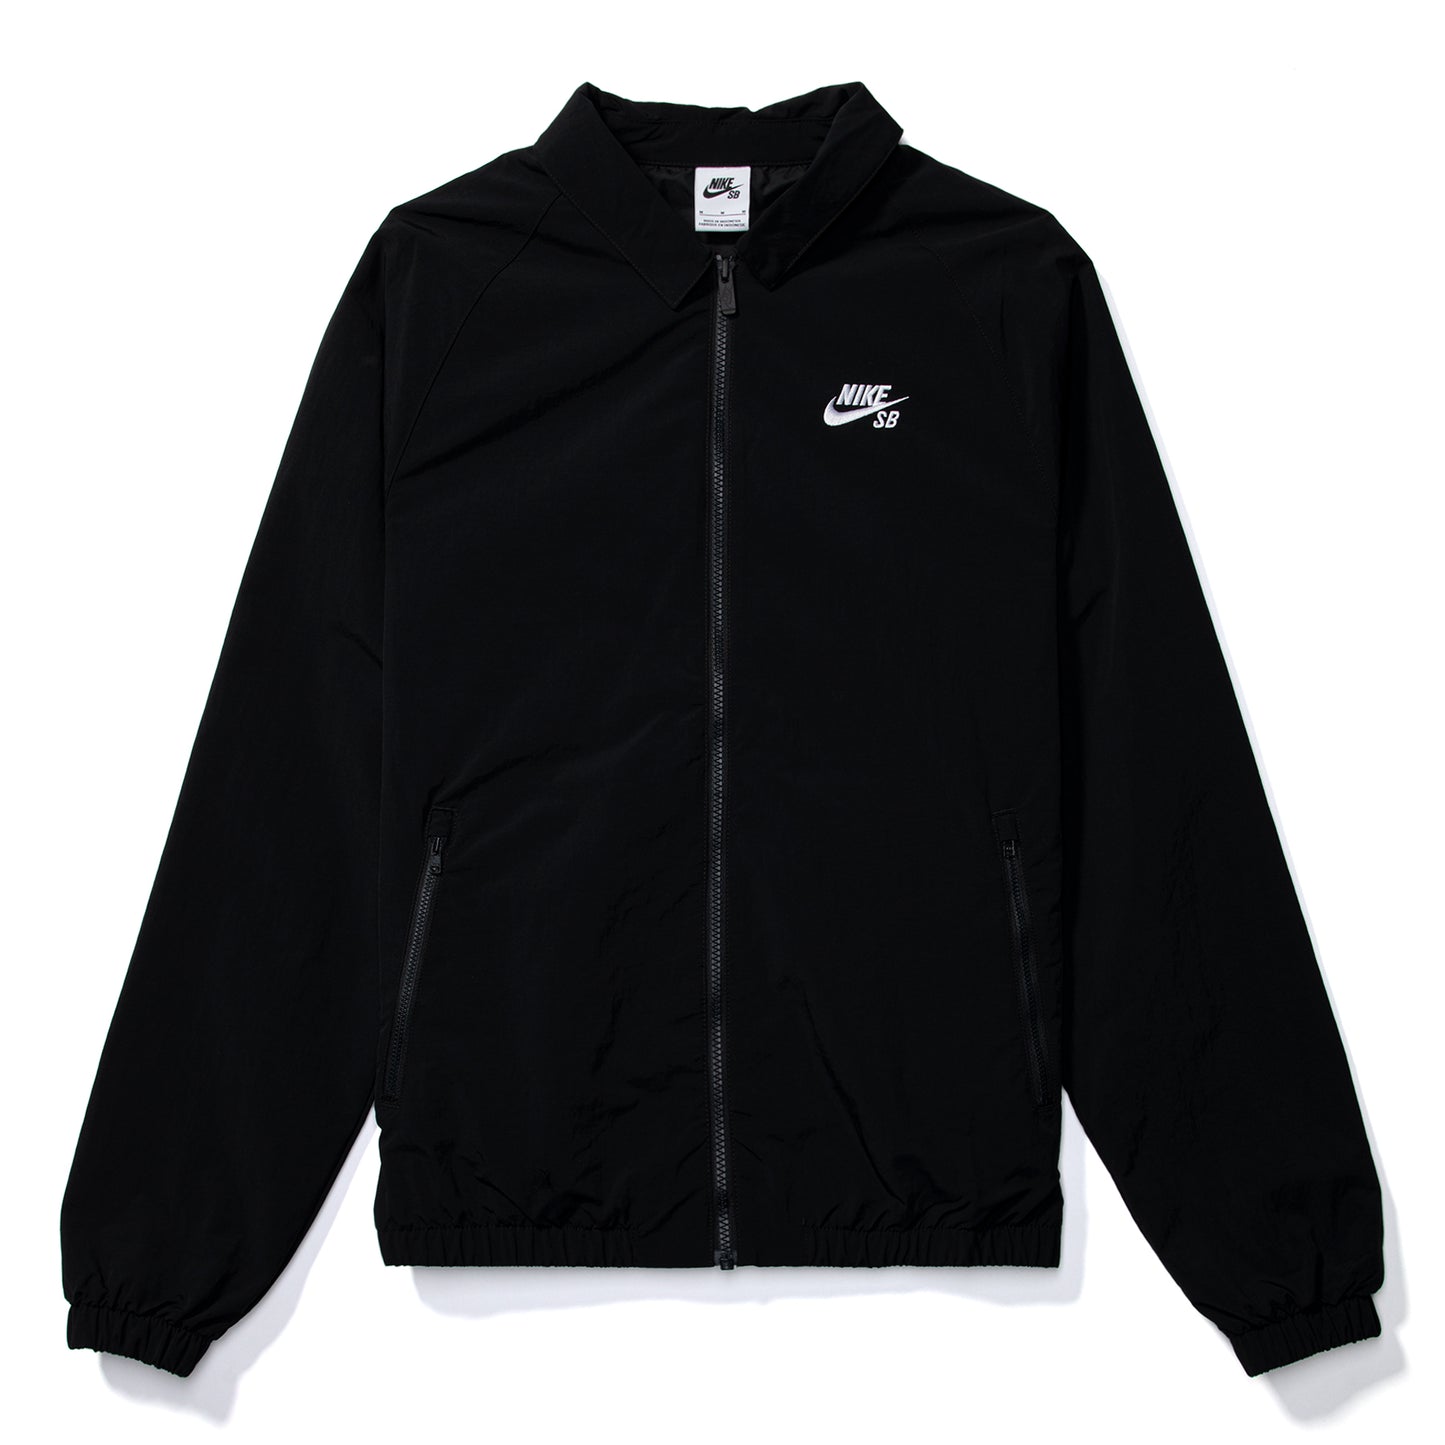 Nike SB Skate Jacket (Black/White)